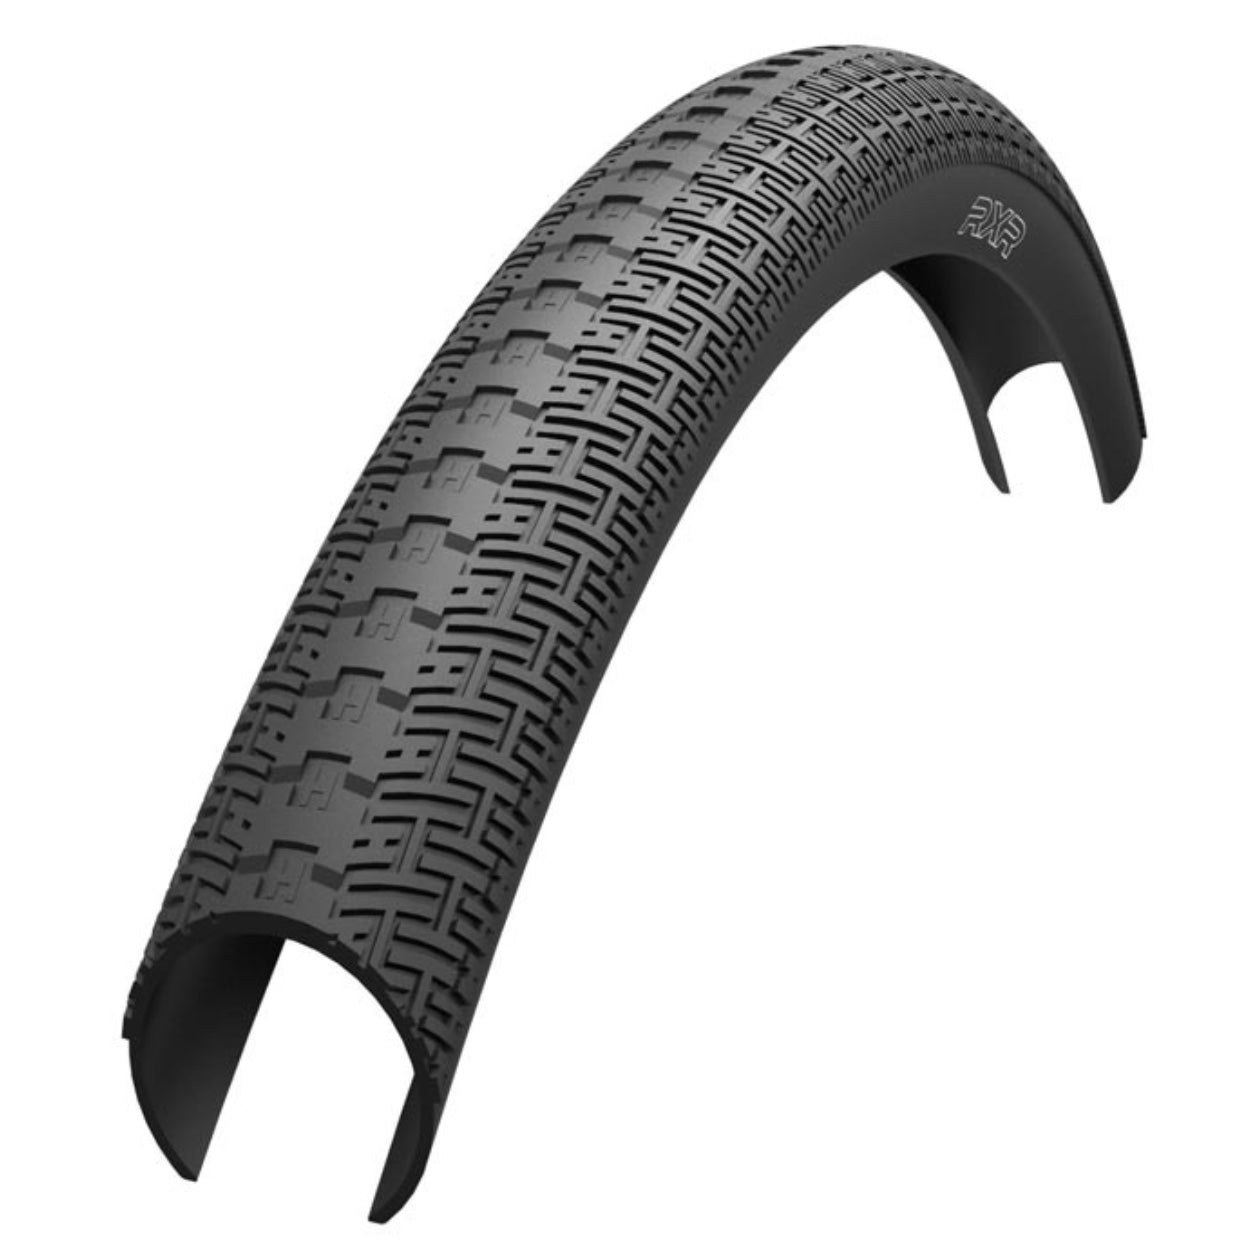 Halo RXR Gravel/Allroad Folding Tire 650x47c - Black